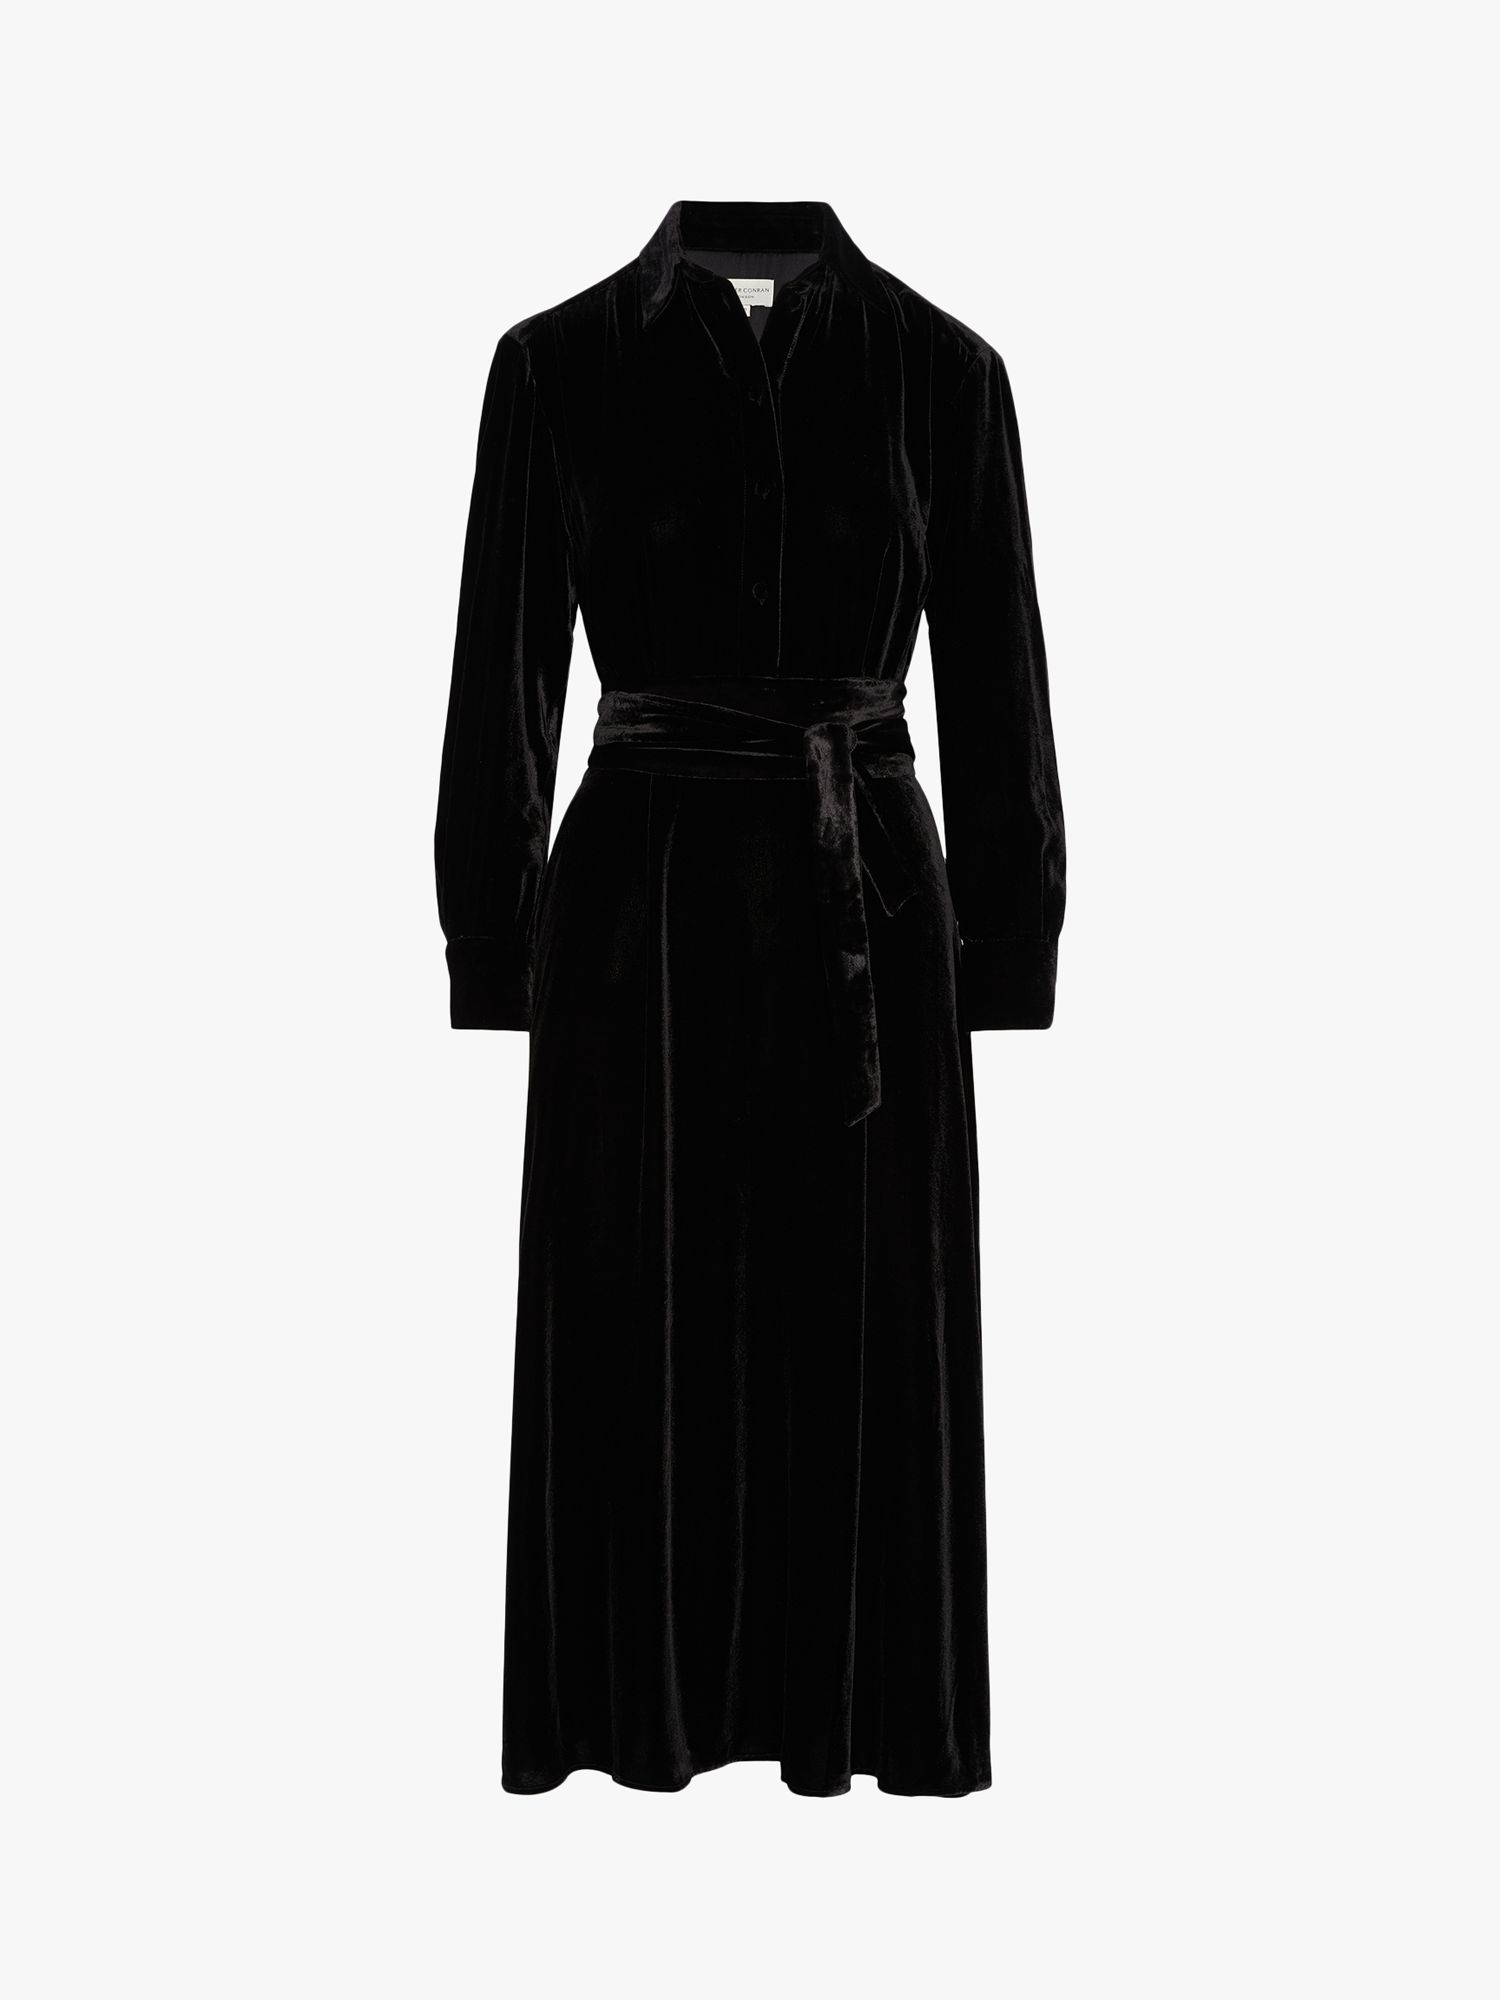 Jasper Conran London Eve Silk Blend Velvet Midi Shirt Dress, Black, 8